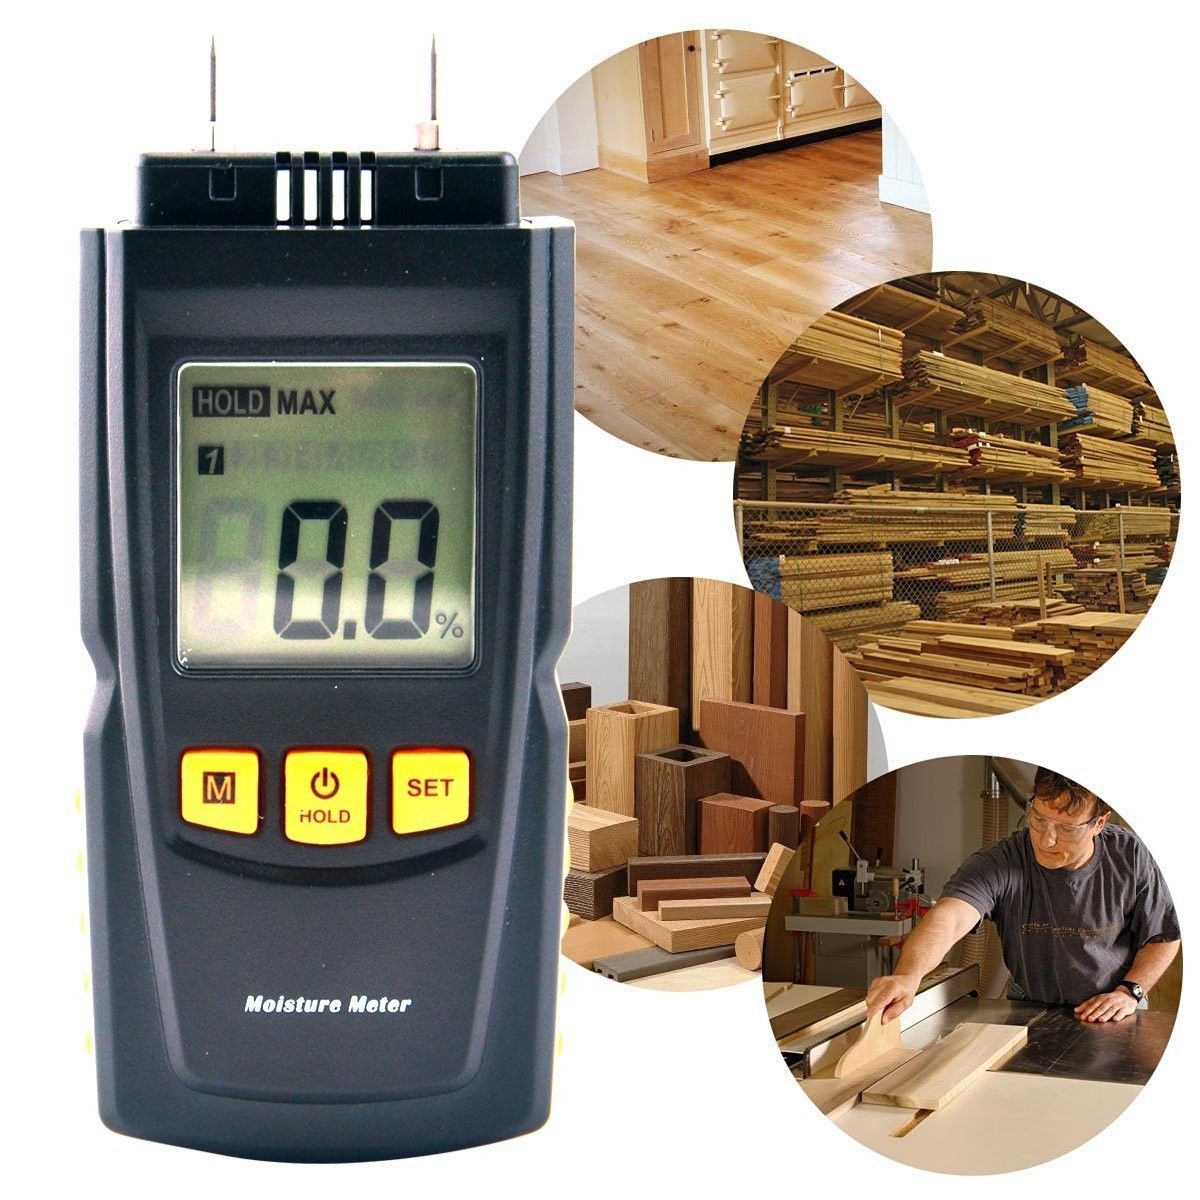 Portable-Digital-LCD-Wood-Moisture-Meter-Damp-Detector-for-Wood-Sheetrock-Carpets-Bamboo-Paper-1124286